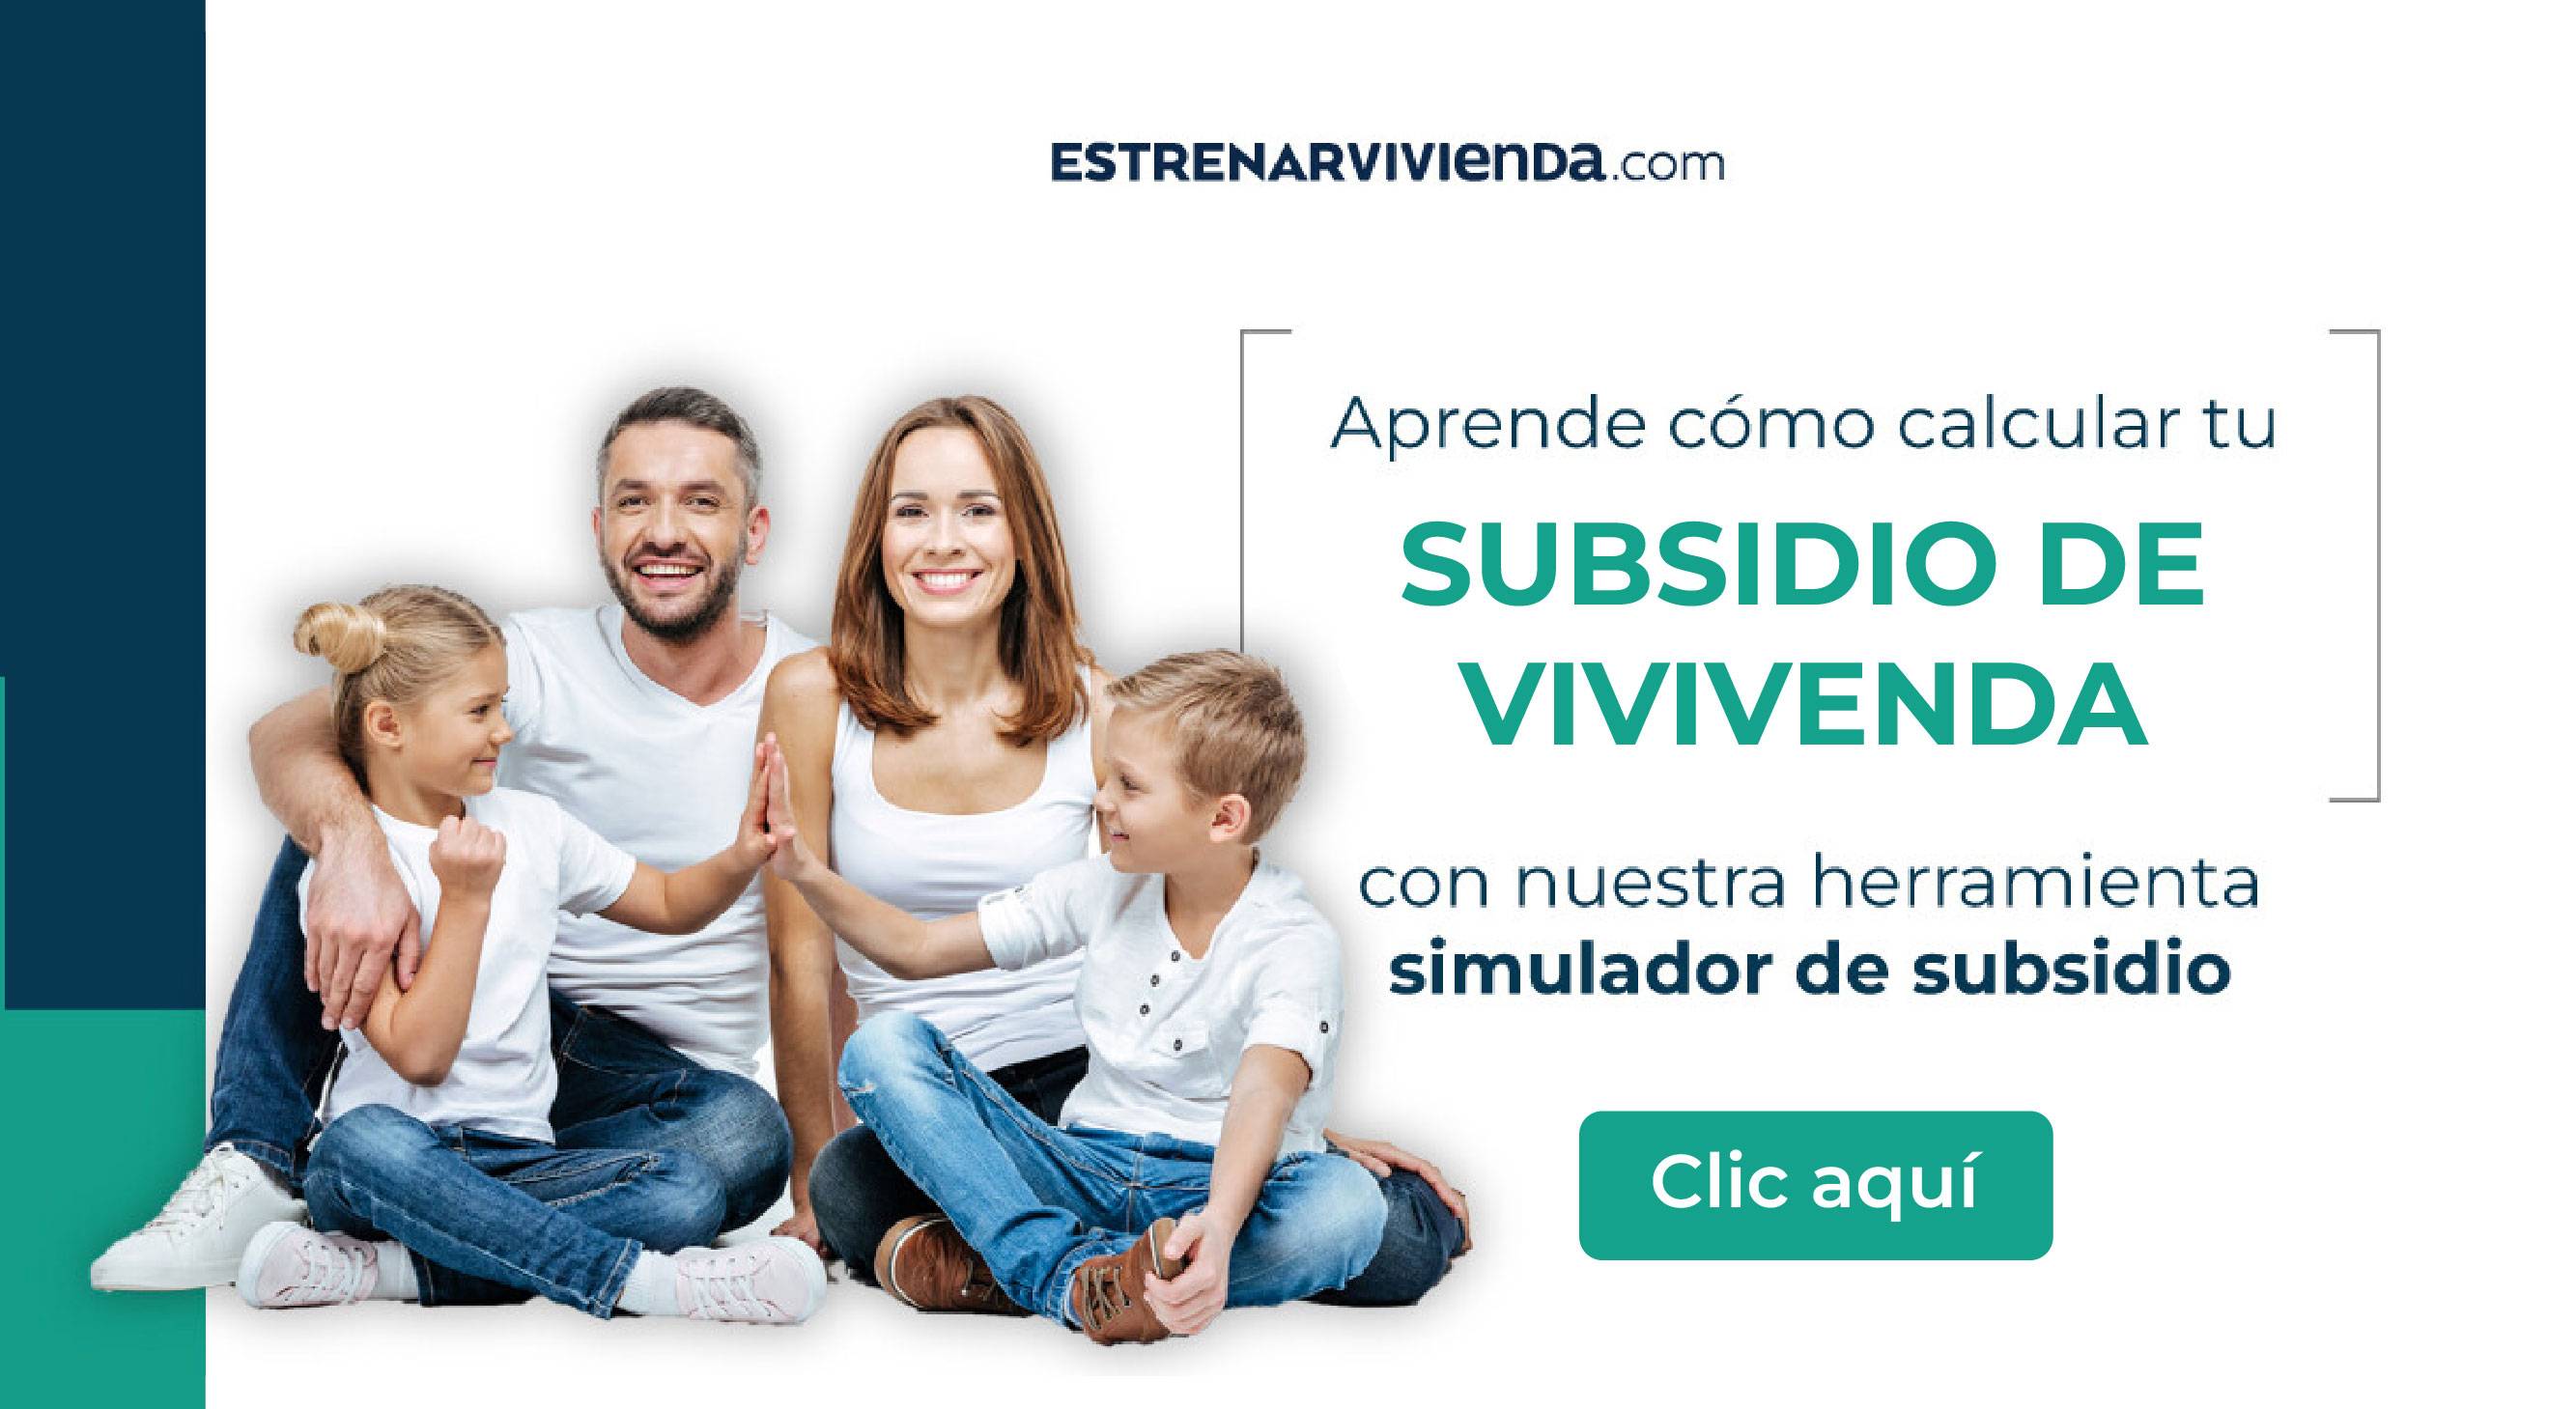 image-subsidios-vivienda-2024